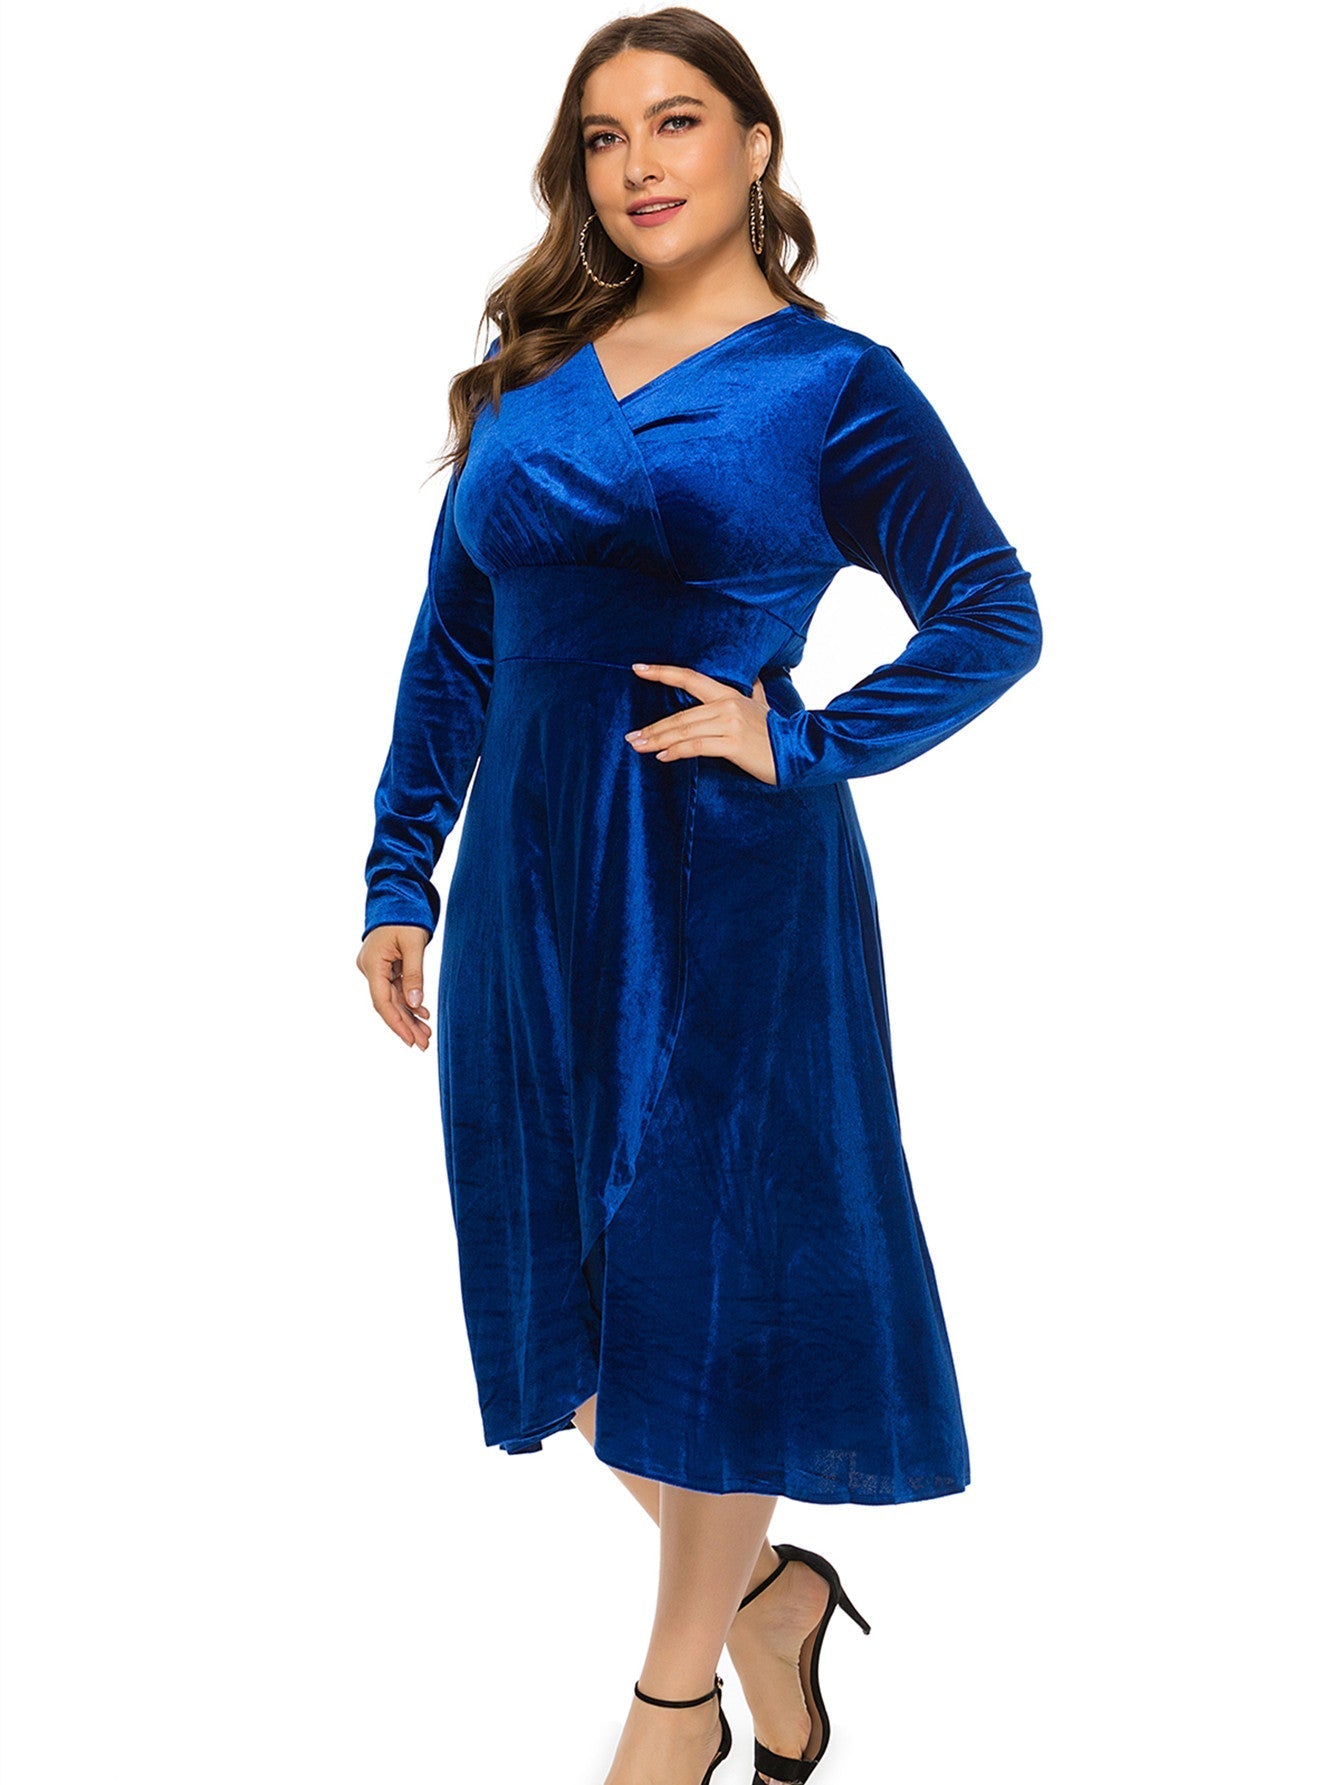 Plus Size High-low Velvet Long Sleeve Party Dress Sai Feel